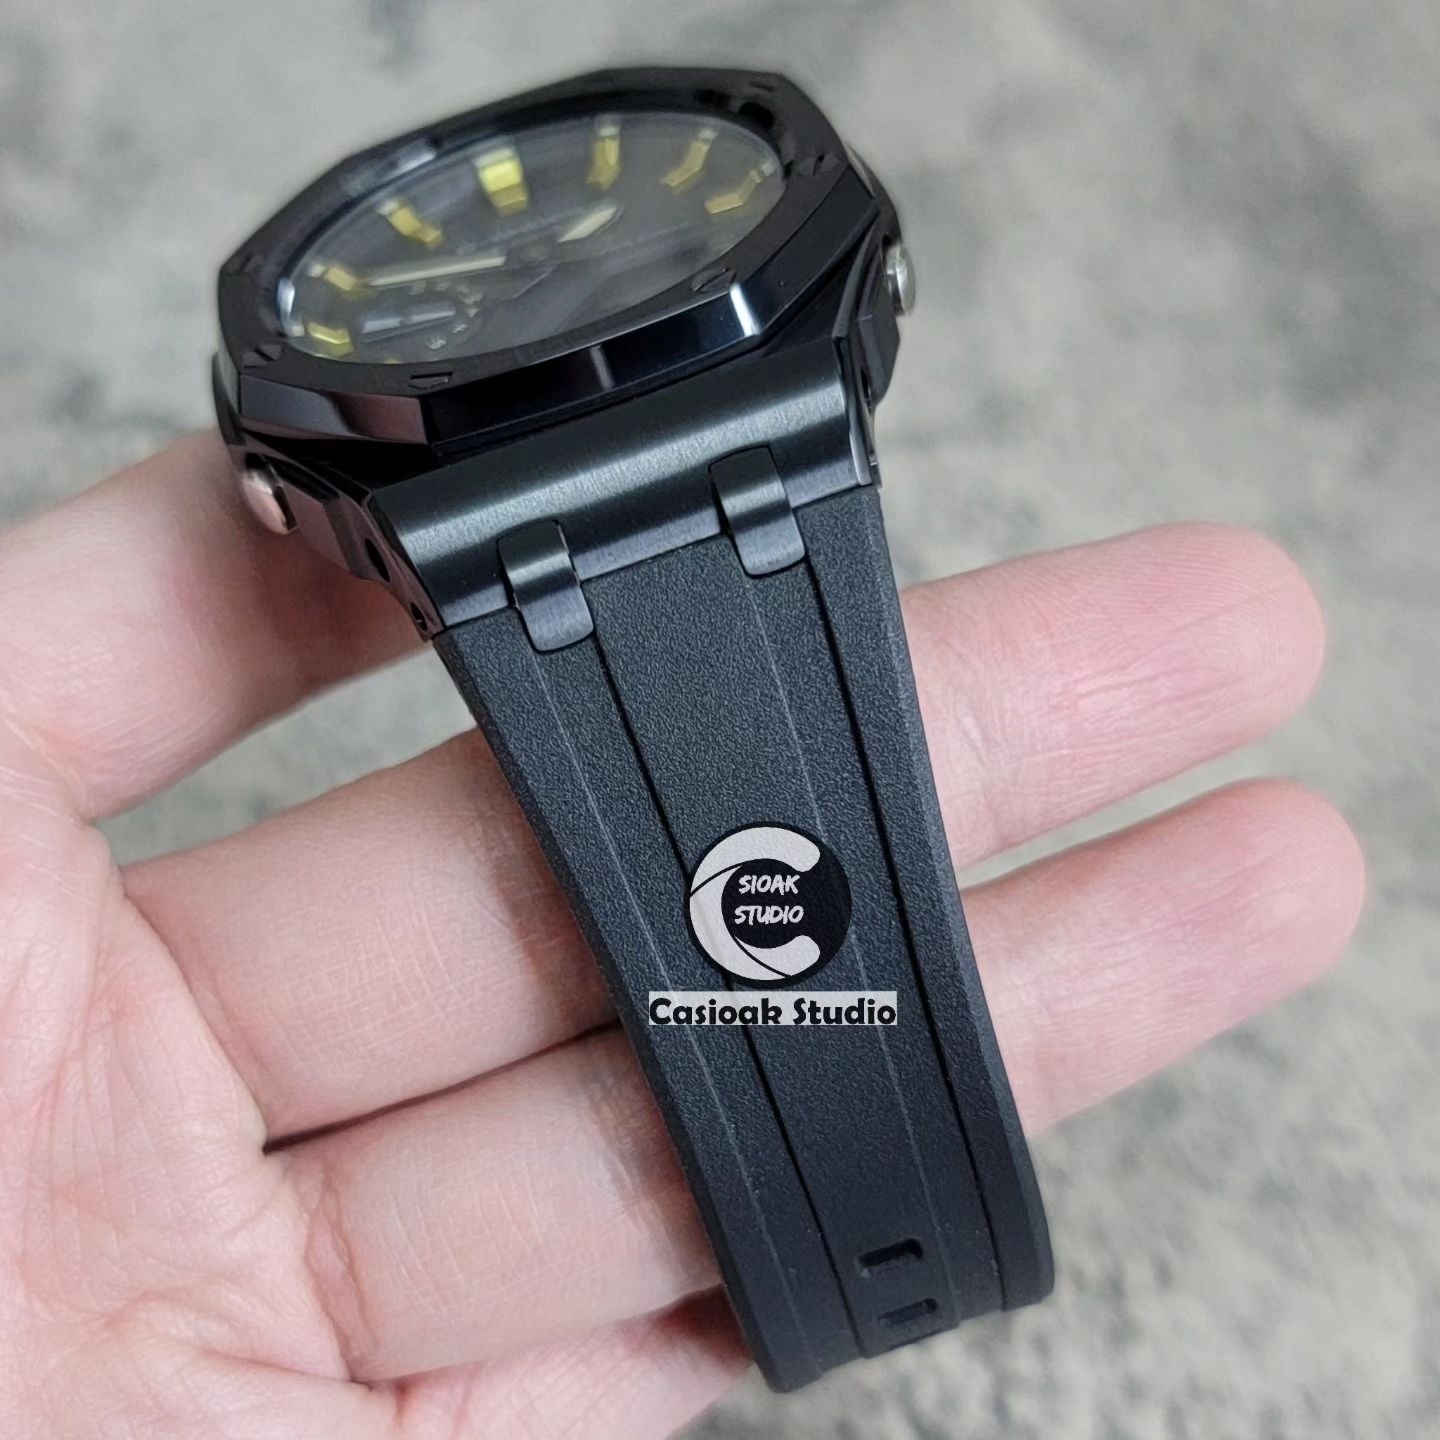 Casioak Mod Watch Offshore Superior Black Case Black Rubber Strap Black Gold Time Mark Black Dial 44mm - Casioak Studio